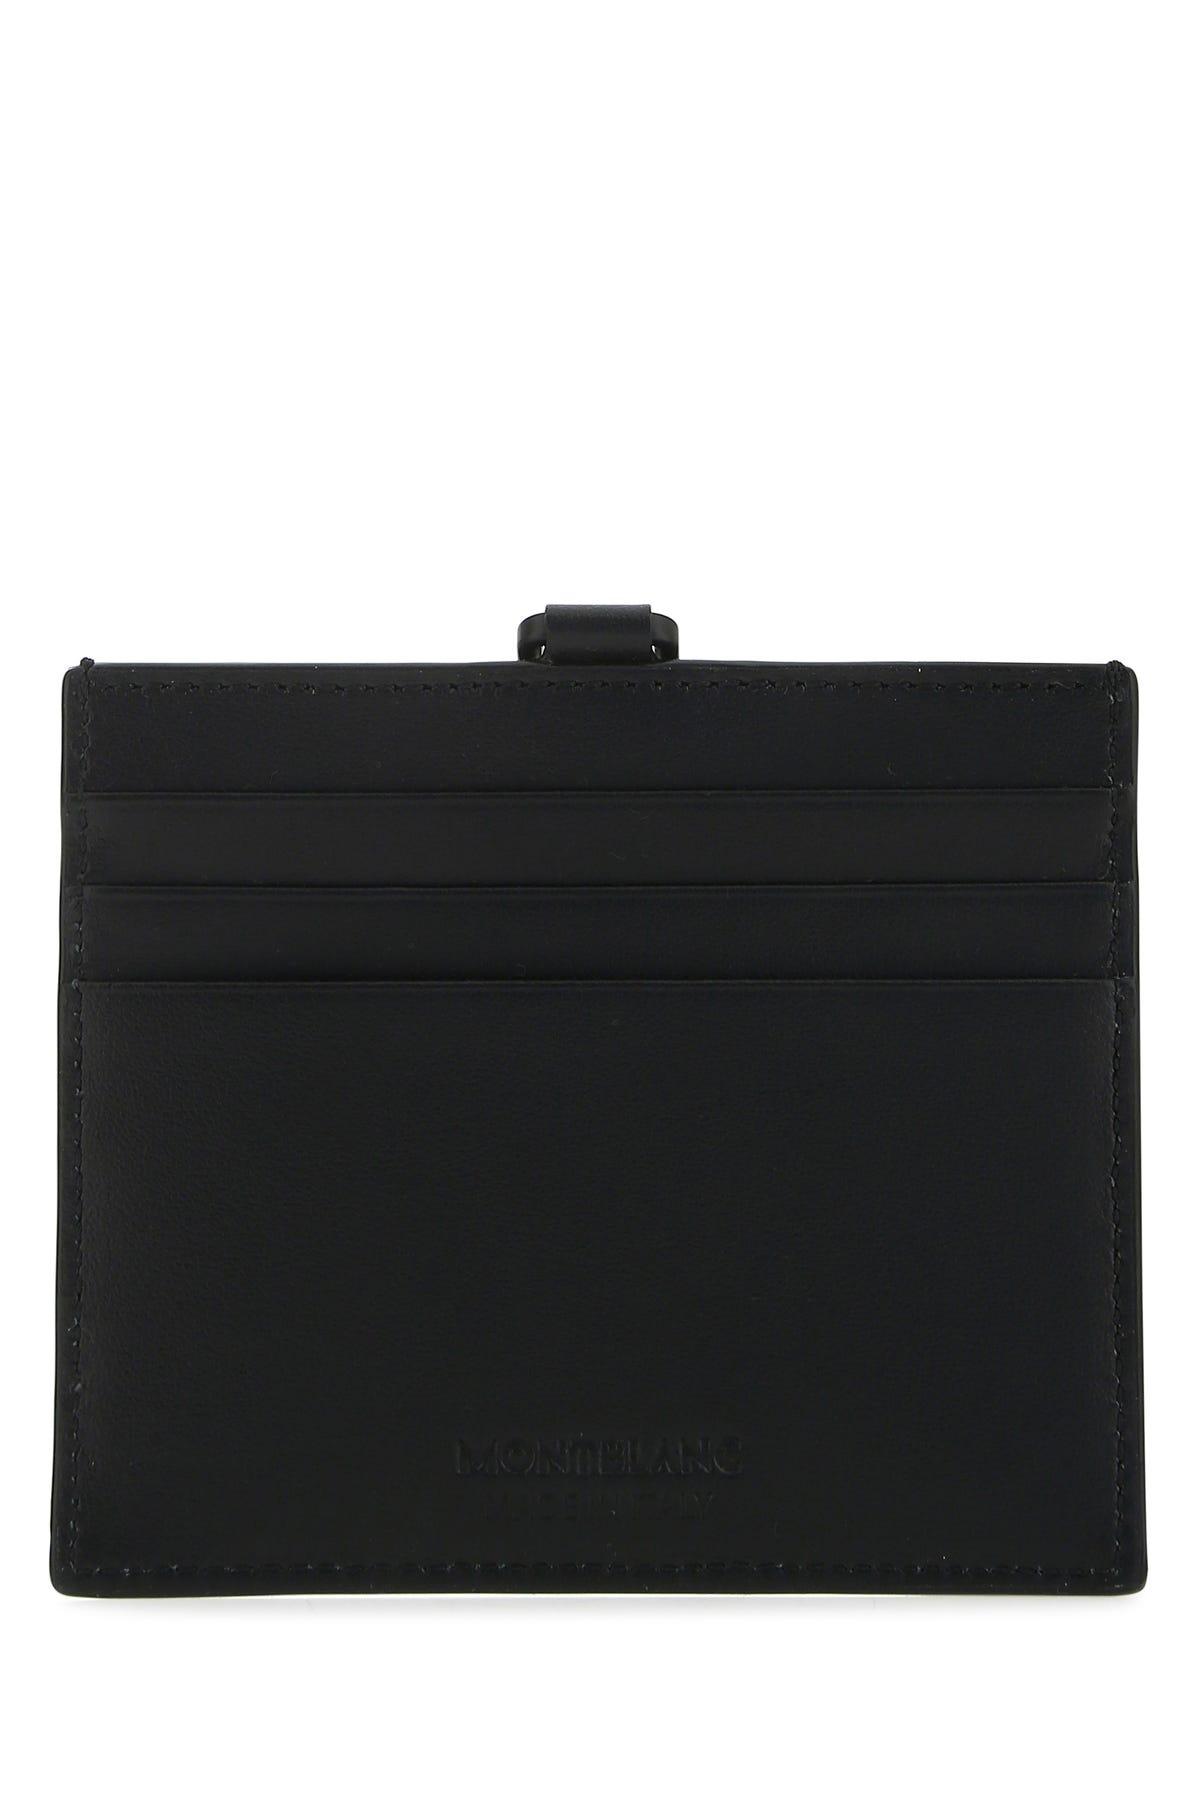 Montblanc Black Leather Extreme 3.0 Card Holder | Lyst